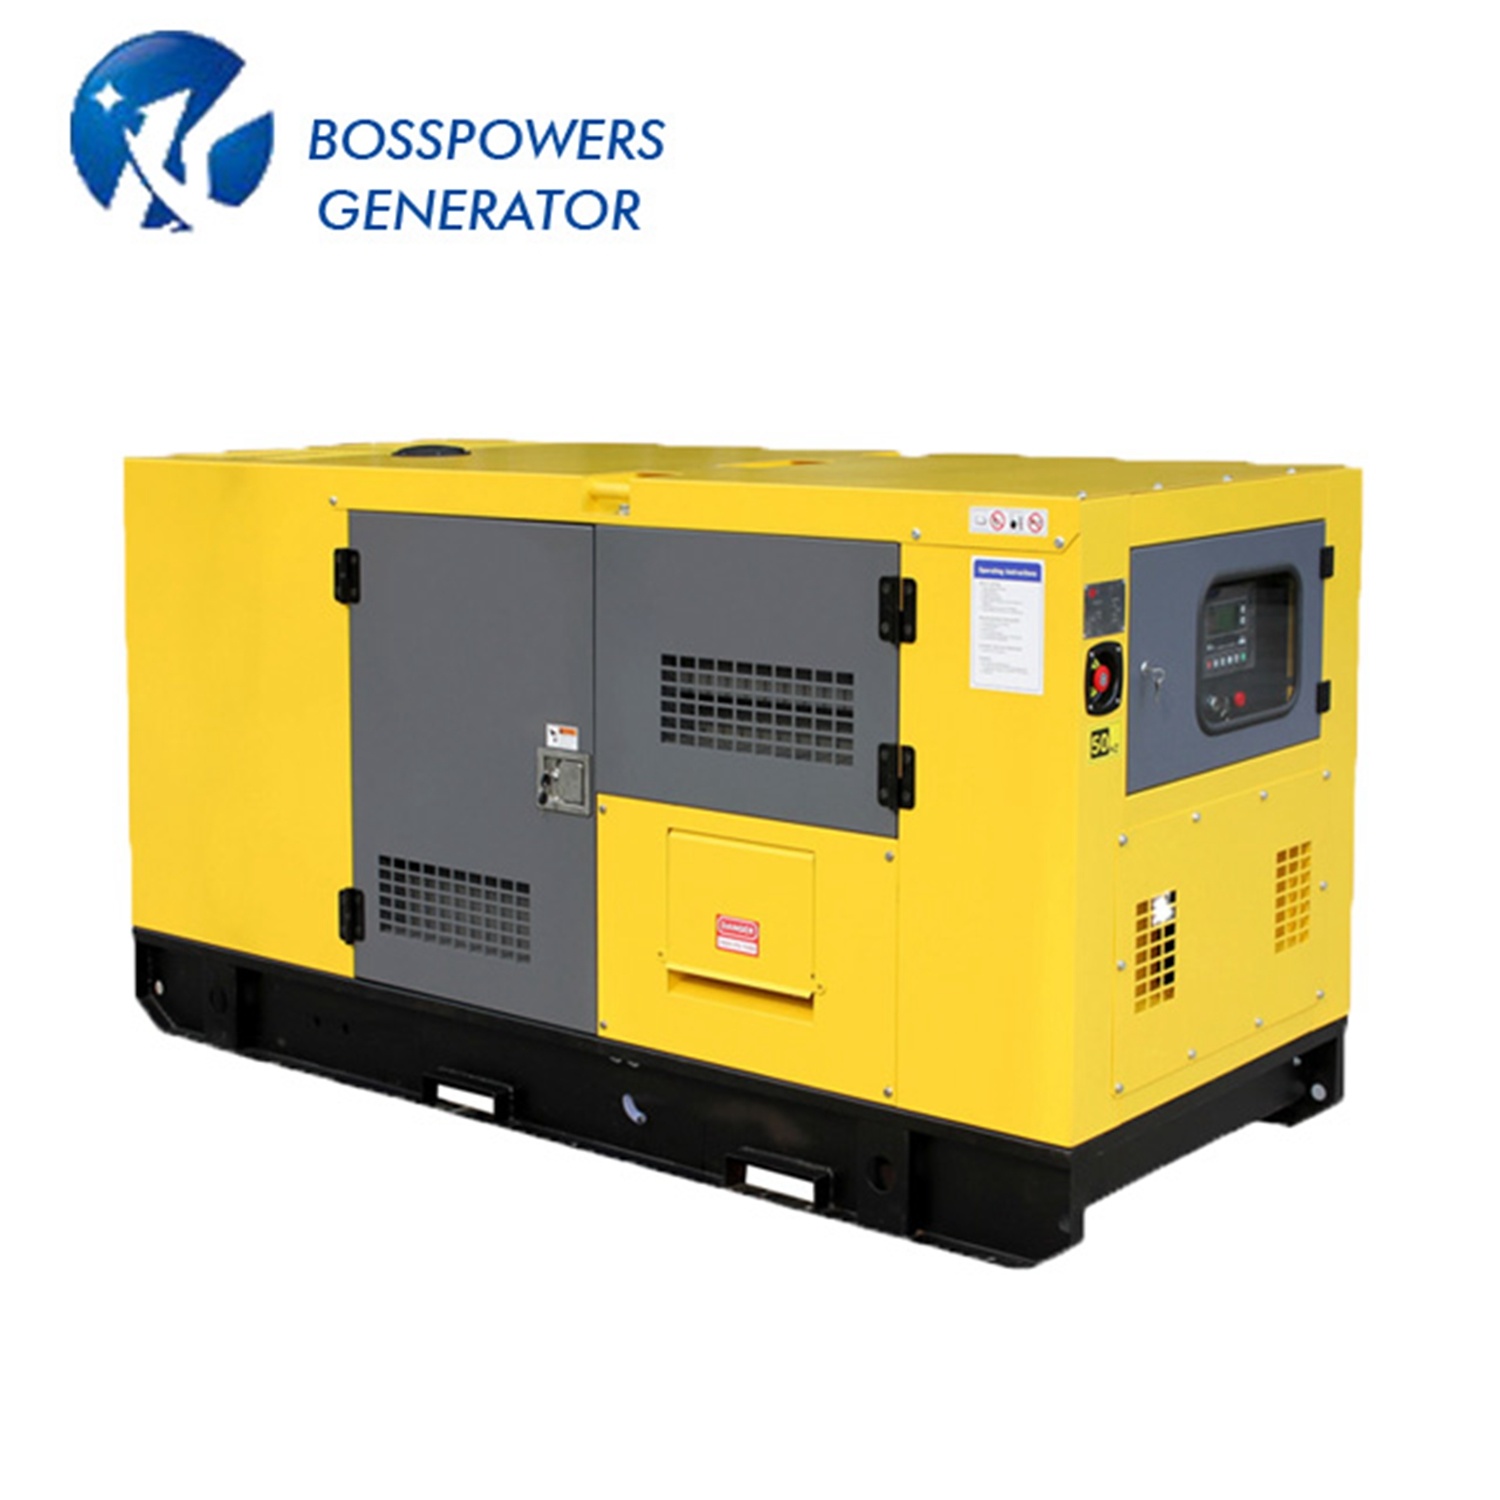 450kw Diesel Generator Power Plant Electric Generator Powered by Bf8m1015cp-La-G5